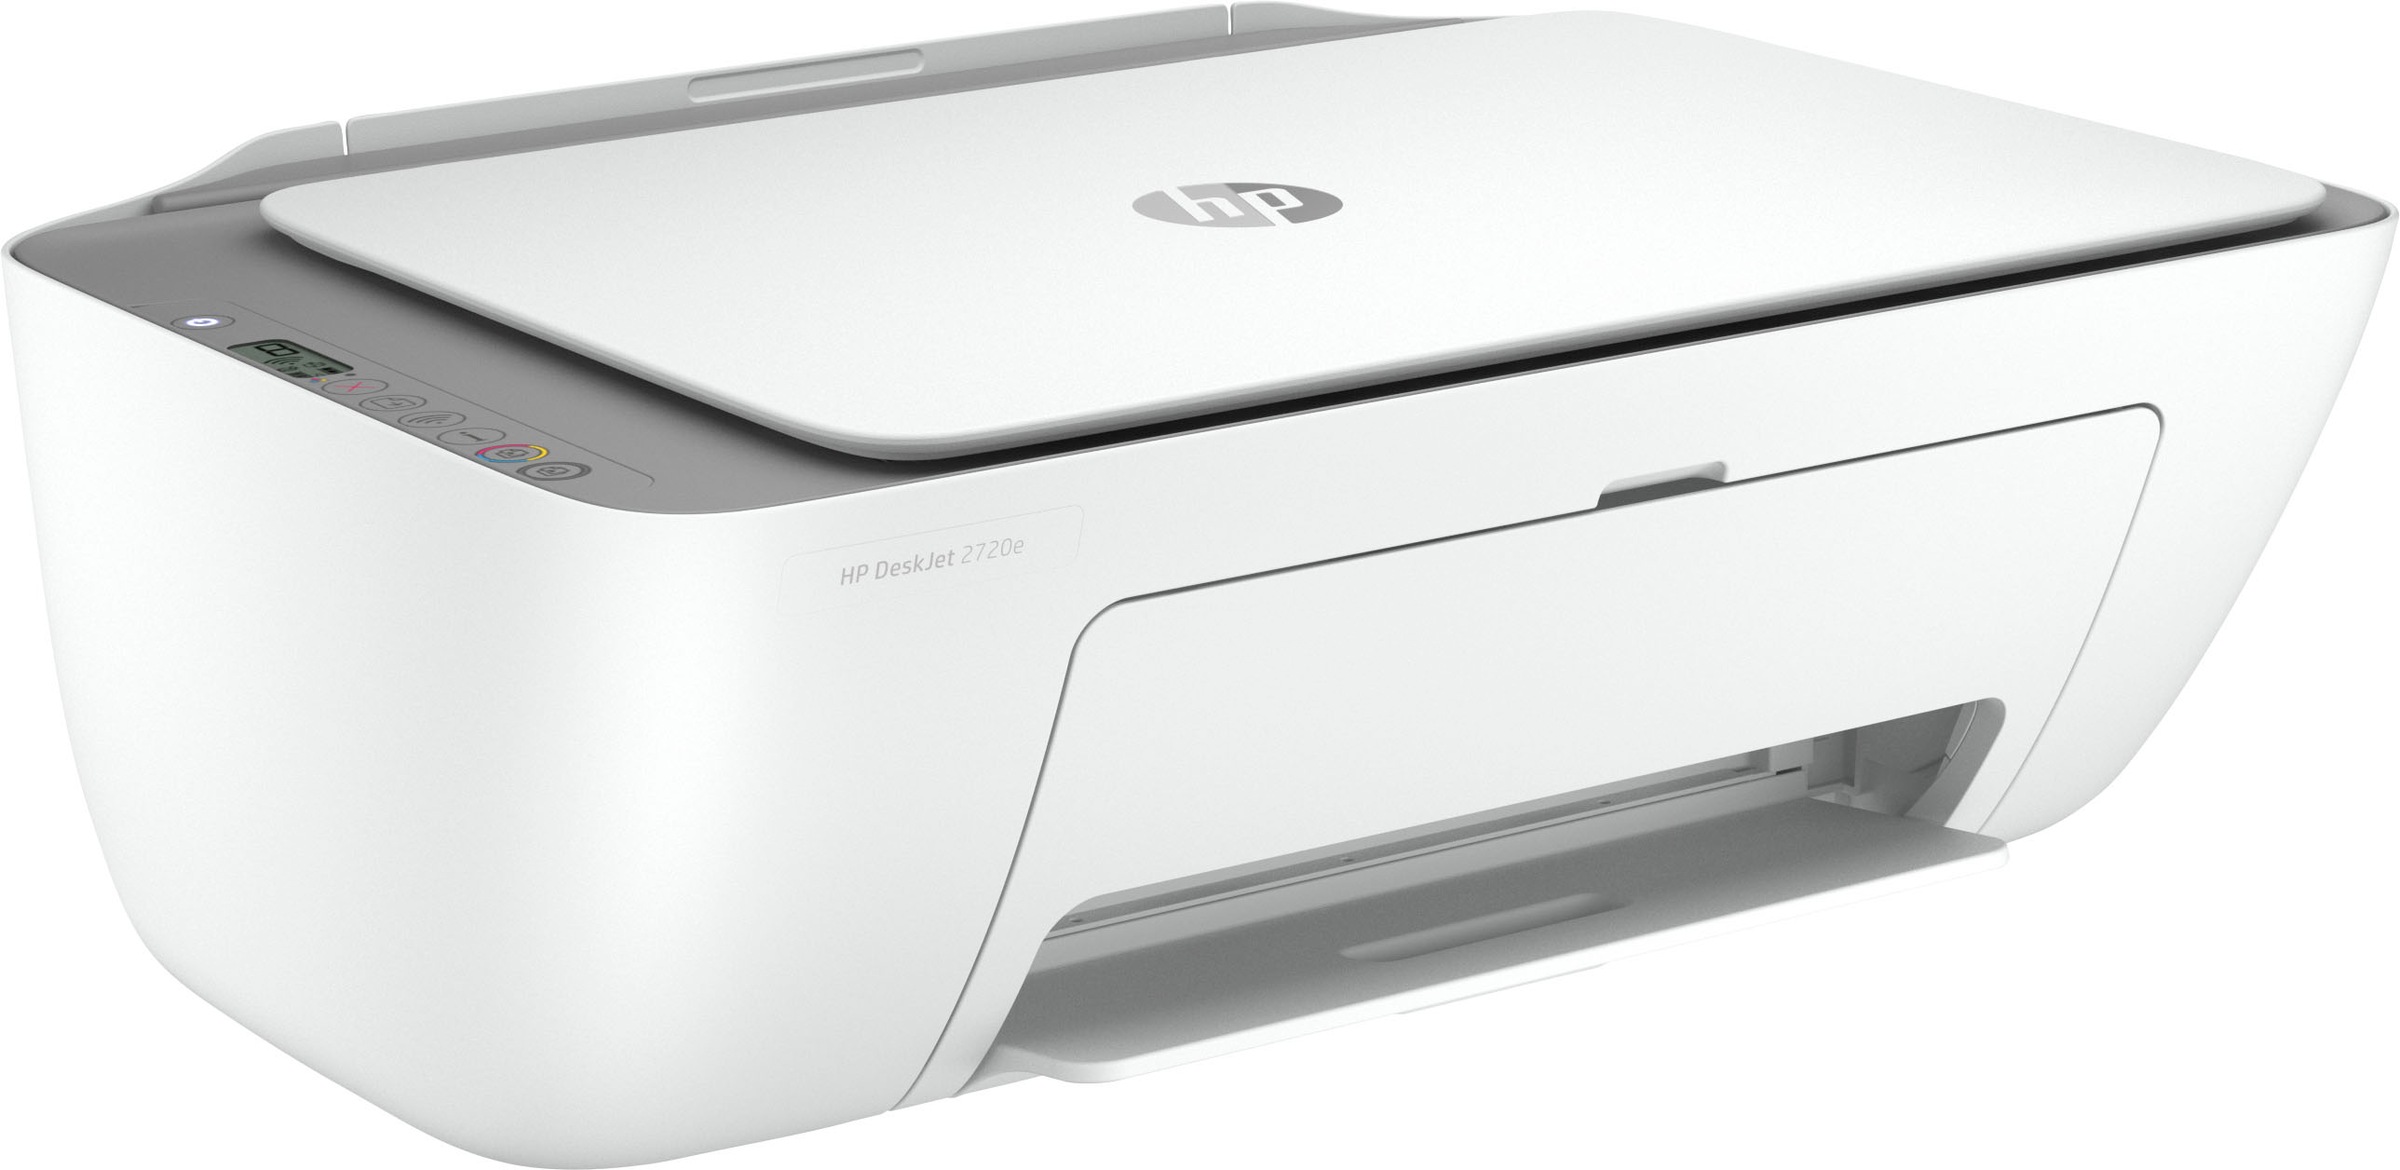 HP Multifunktionsdrucker »DeskJet 2720e«, 6 Monate gratis Drucken mit HP Instant Ink inklusive